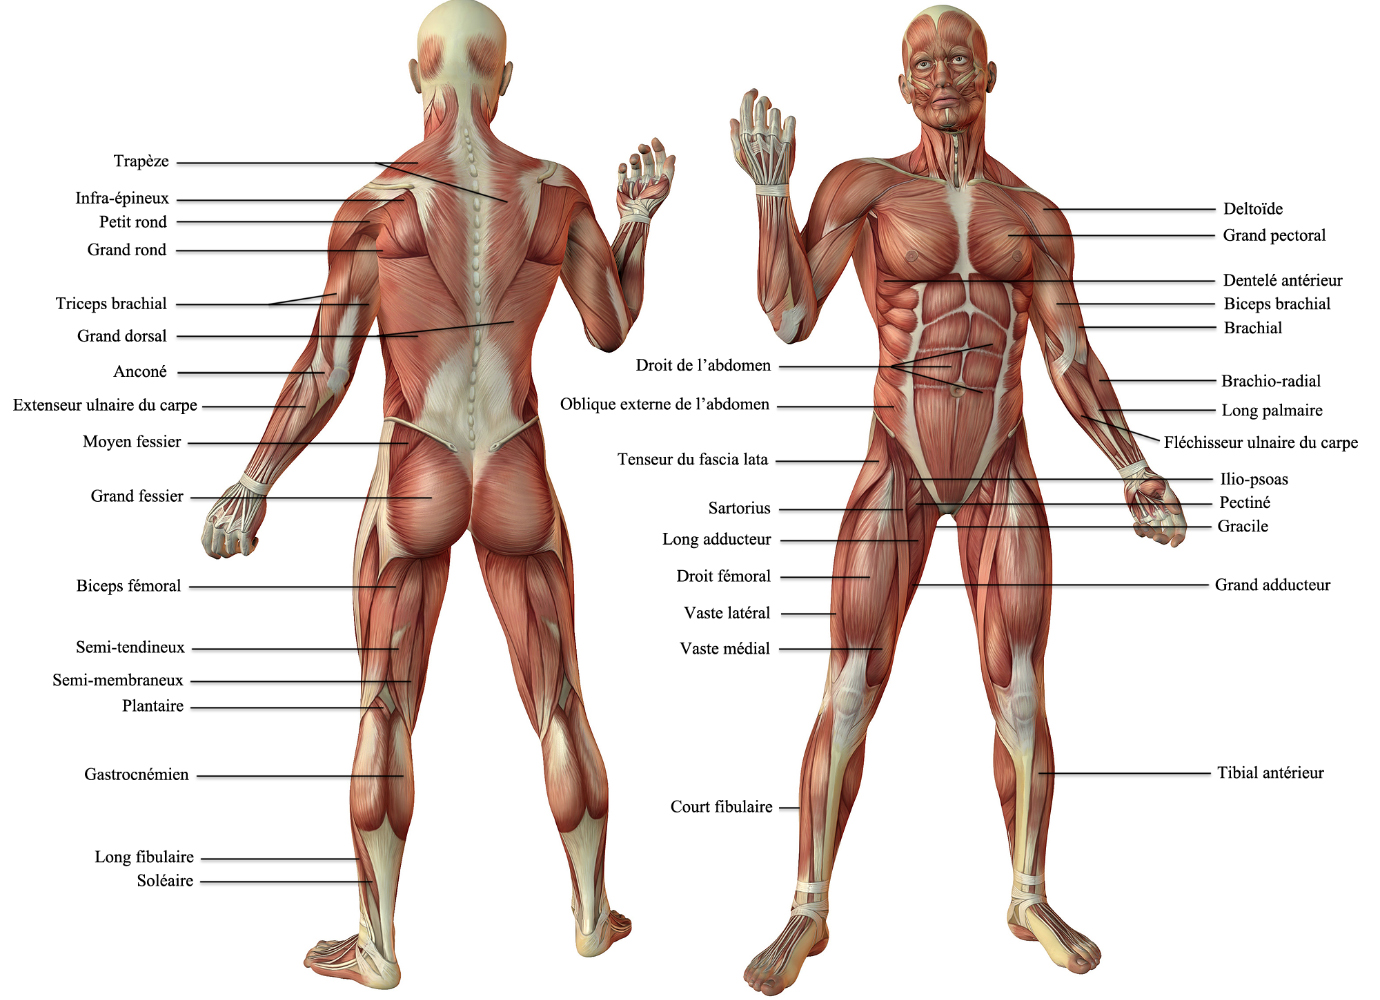 les muscles du corps humain image